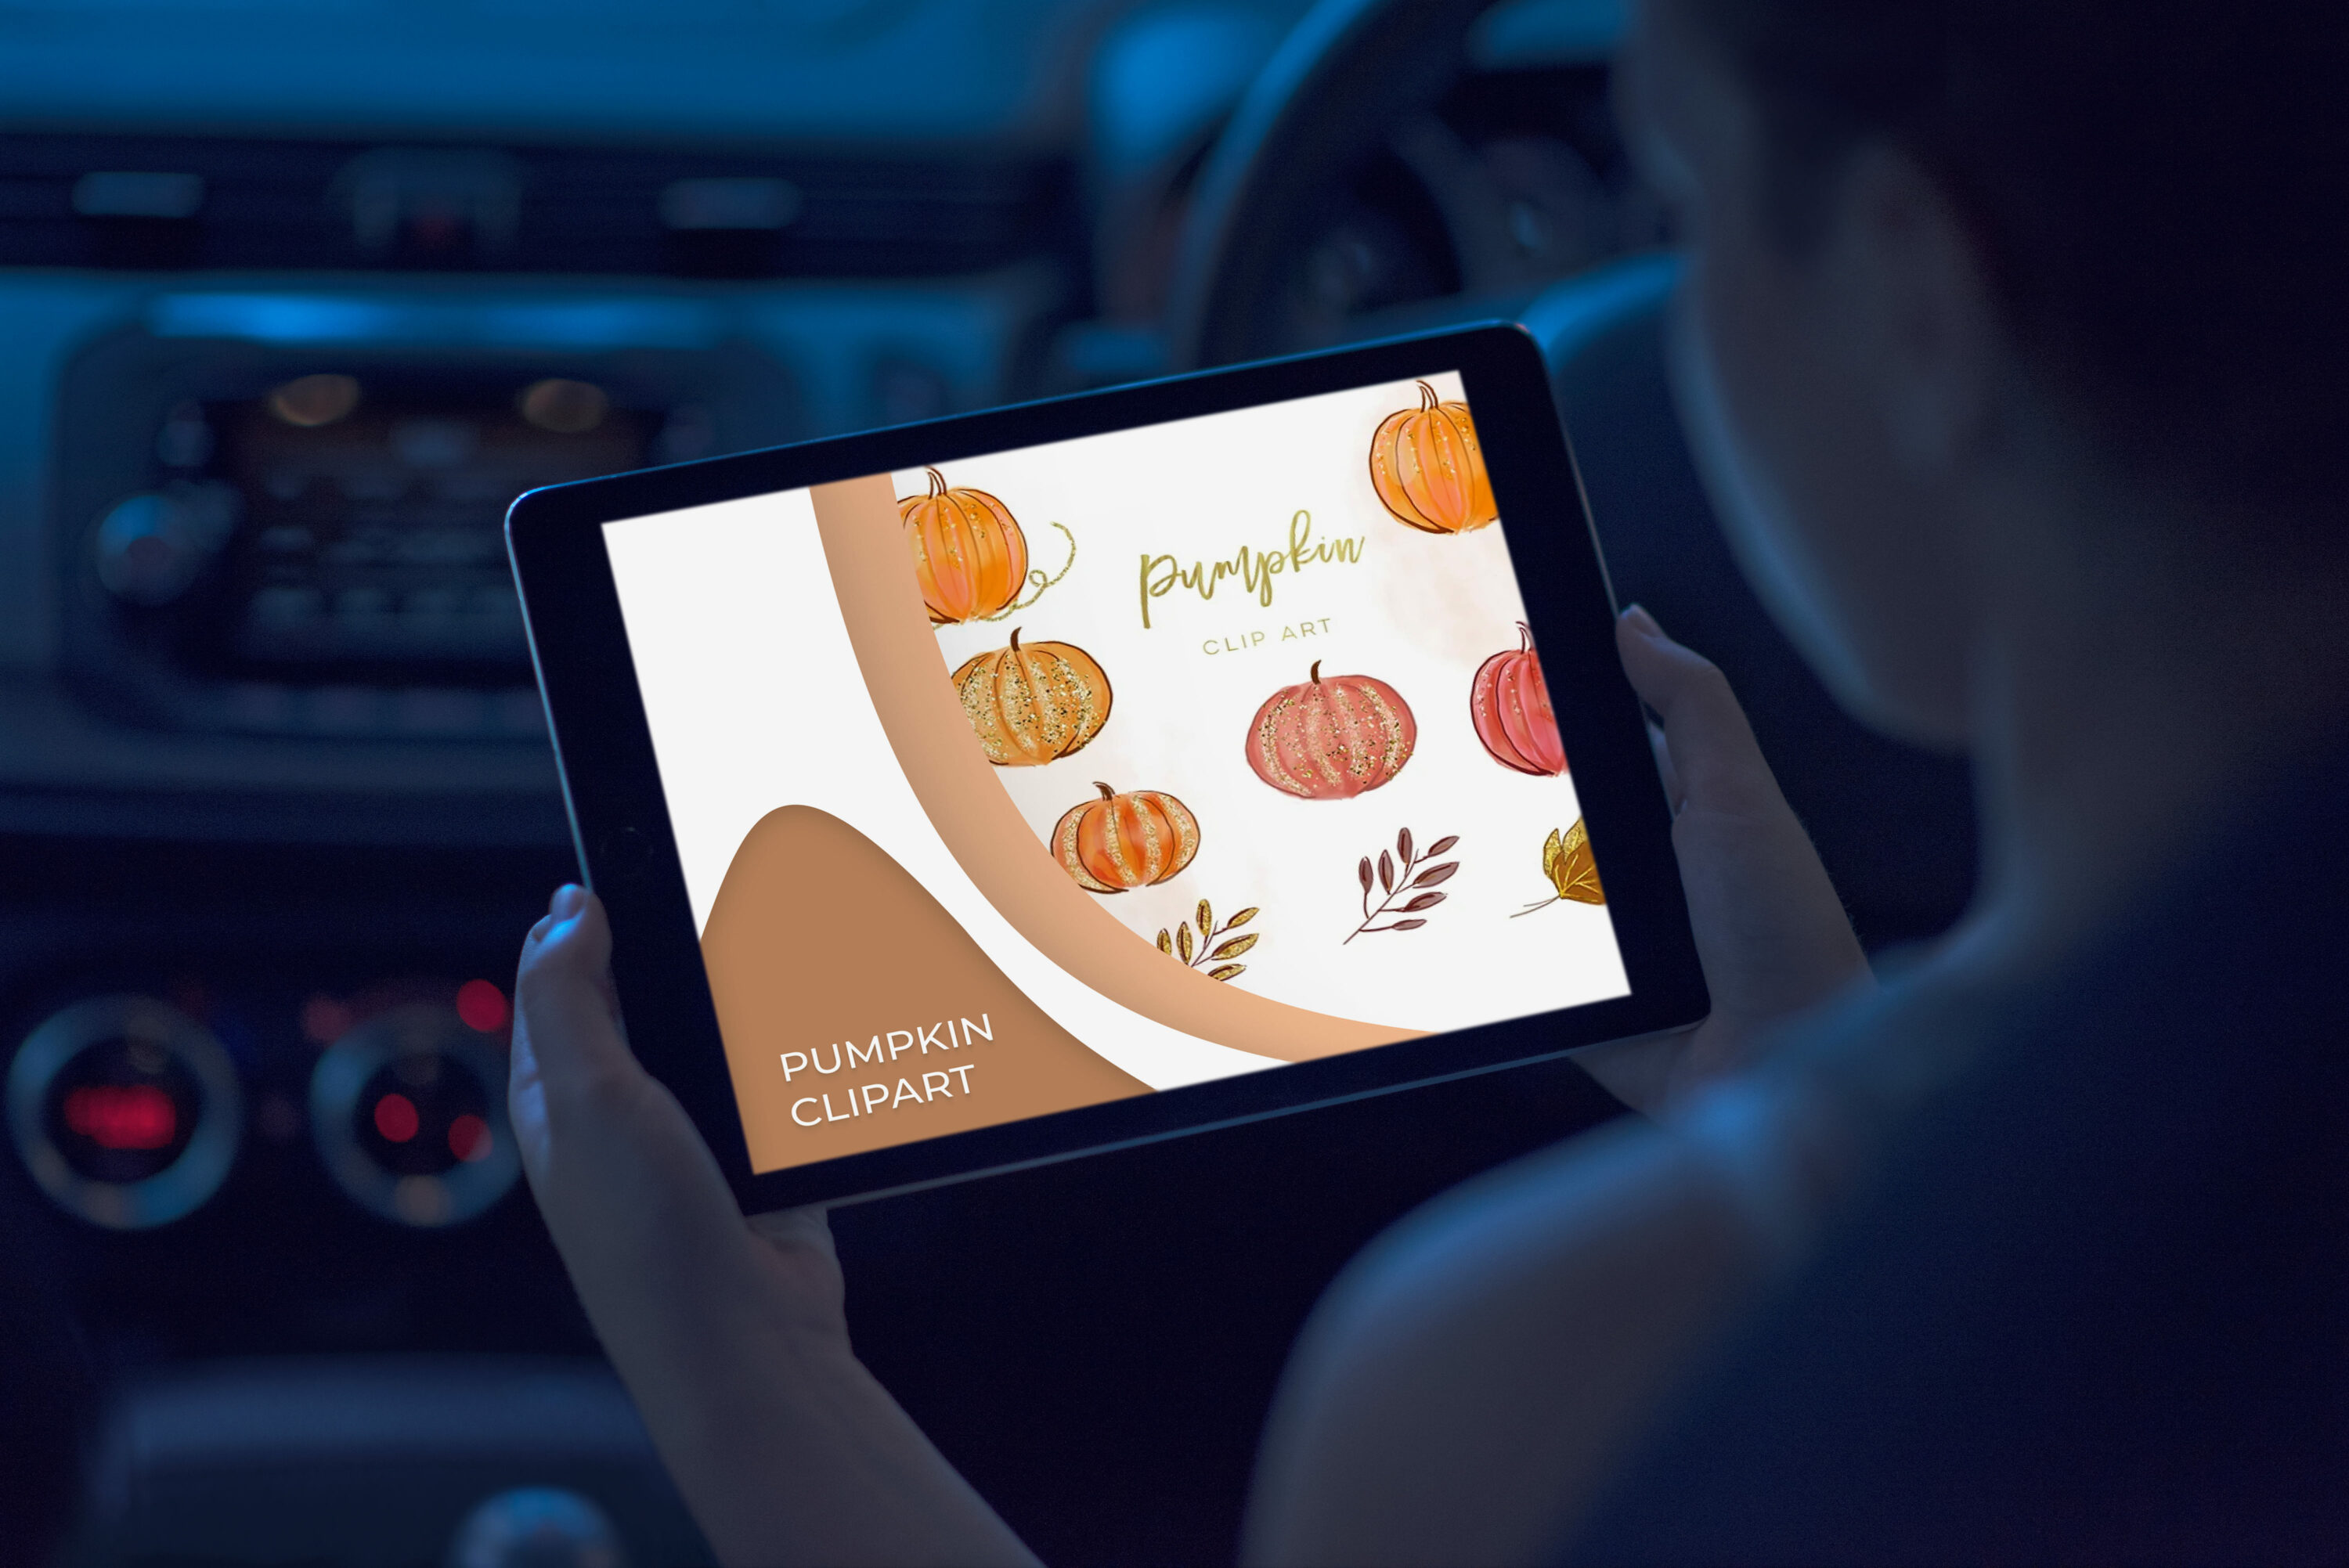 Pumpkin Clipart - tablet.